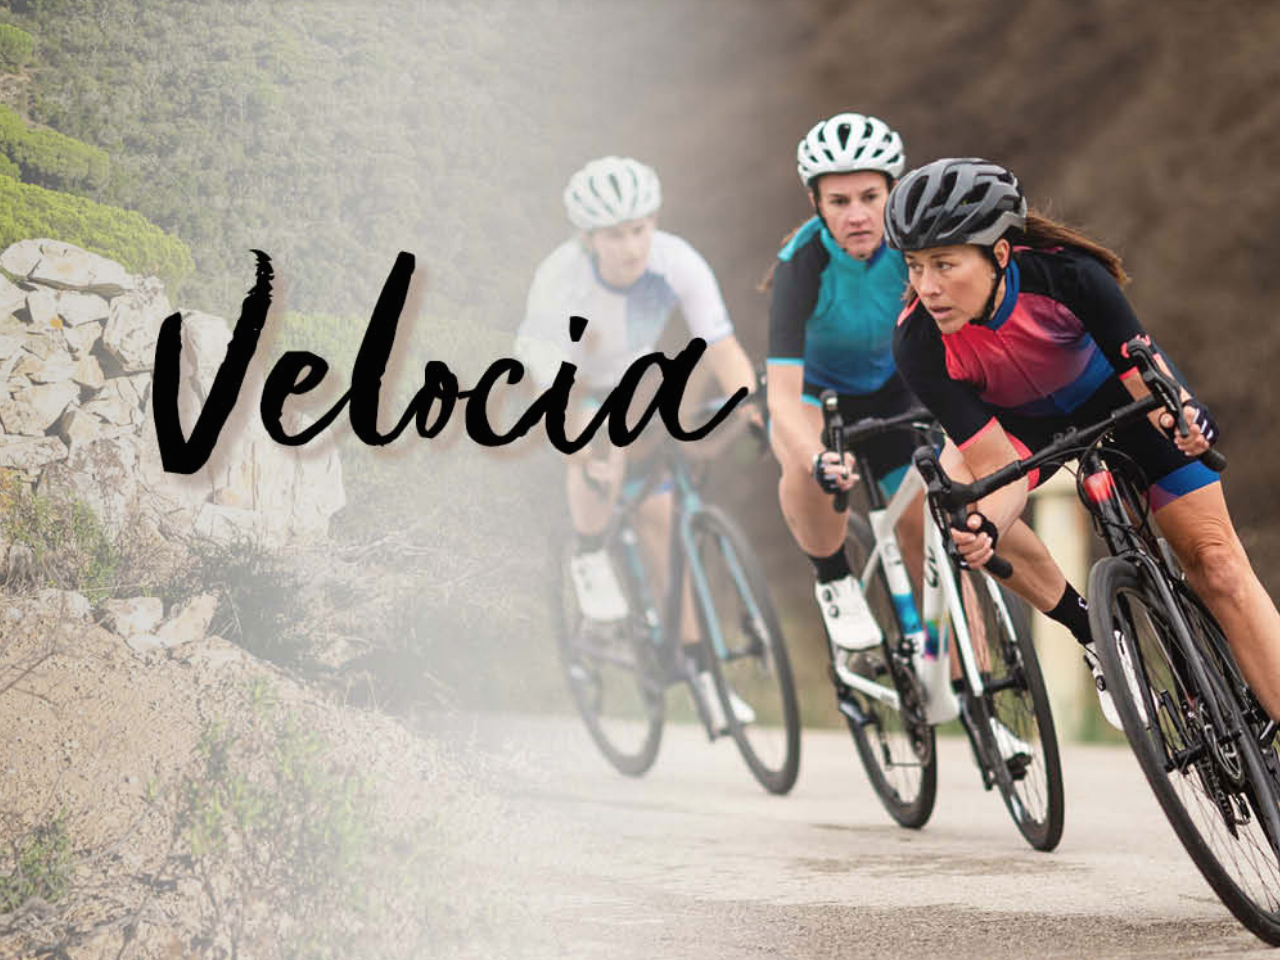 velocia film documentaire sur le cyclisme féminin